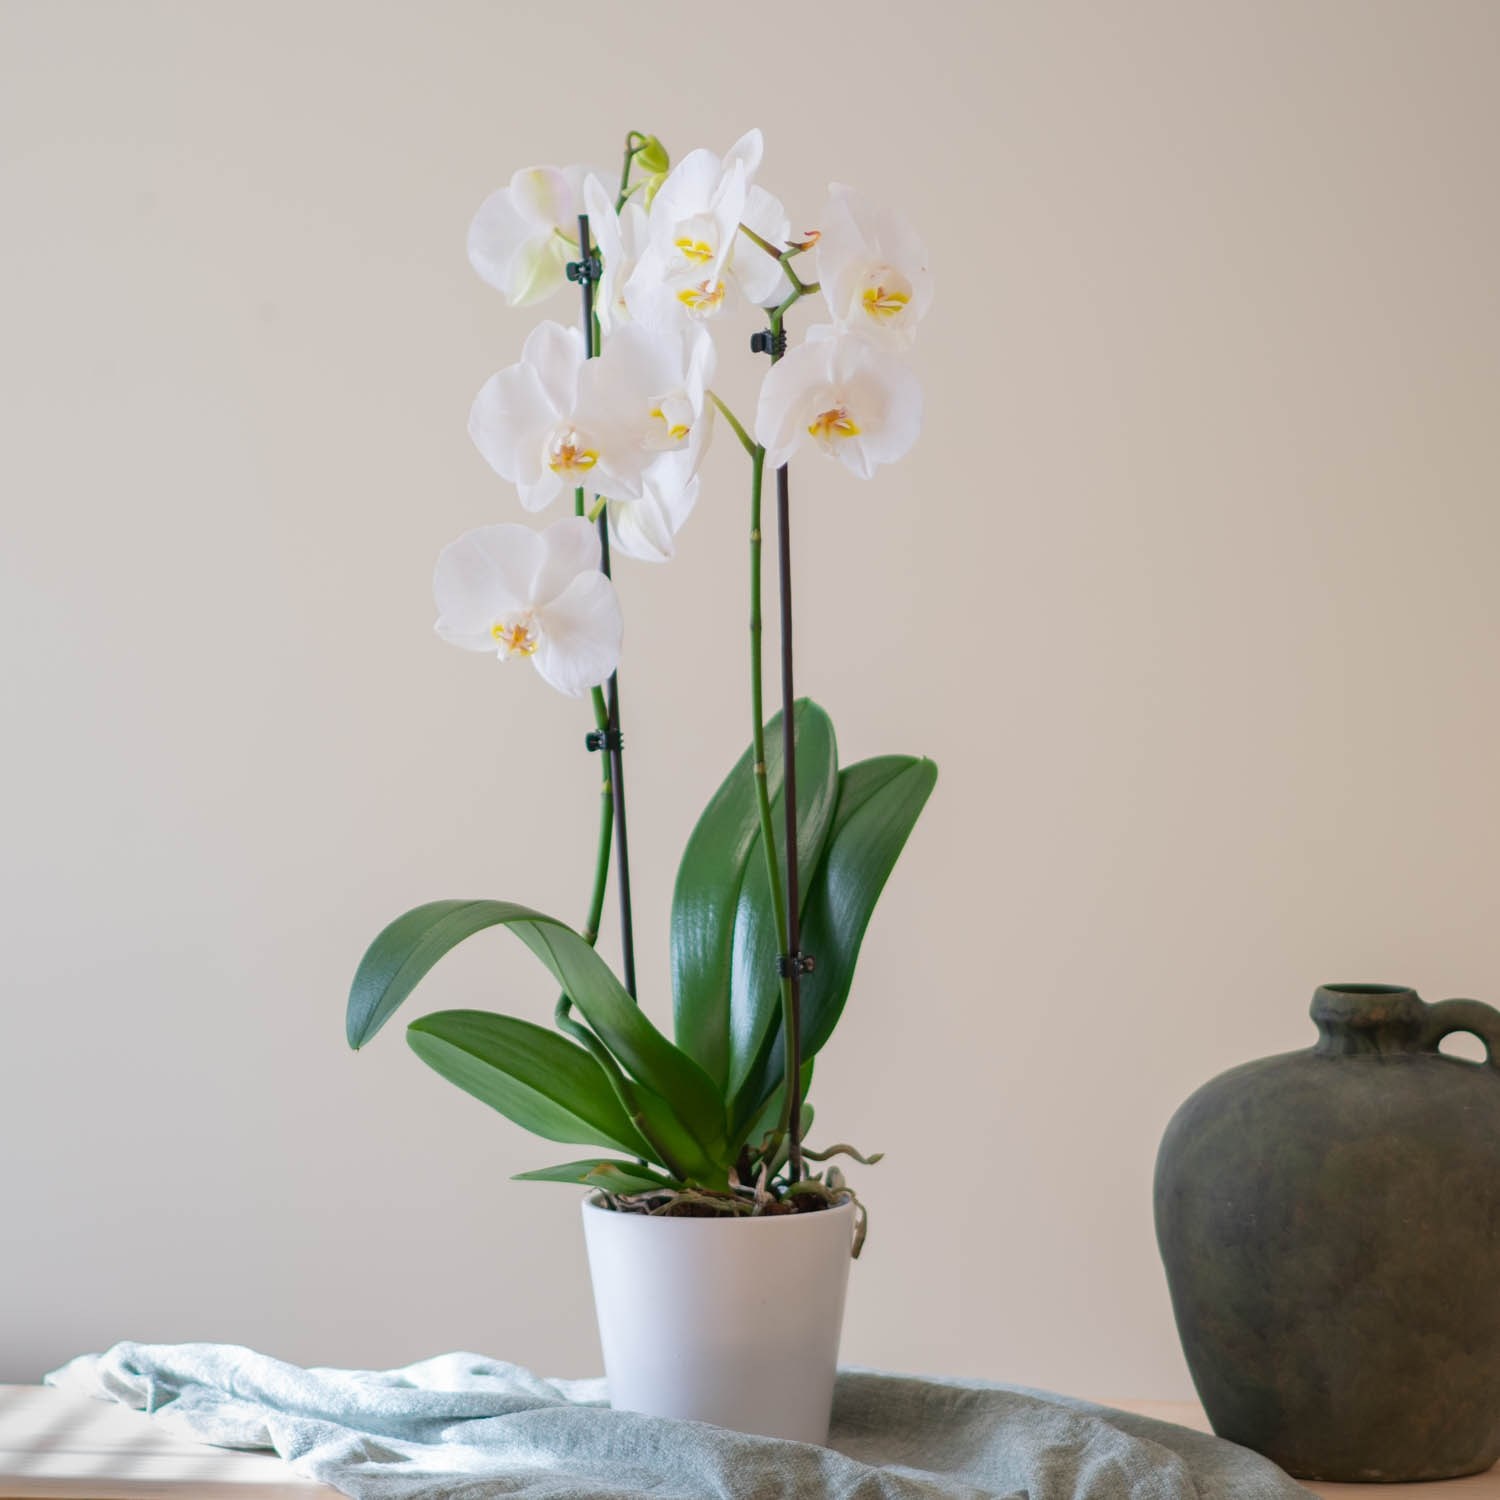 Phalaenopsis Premium Plant